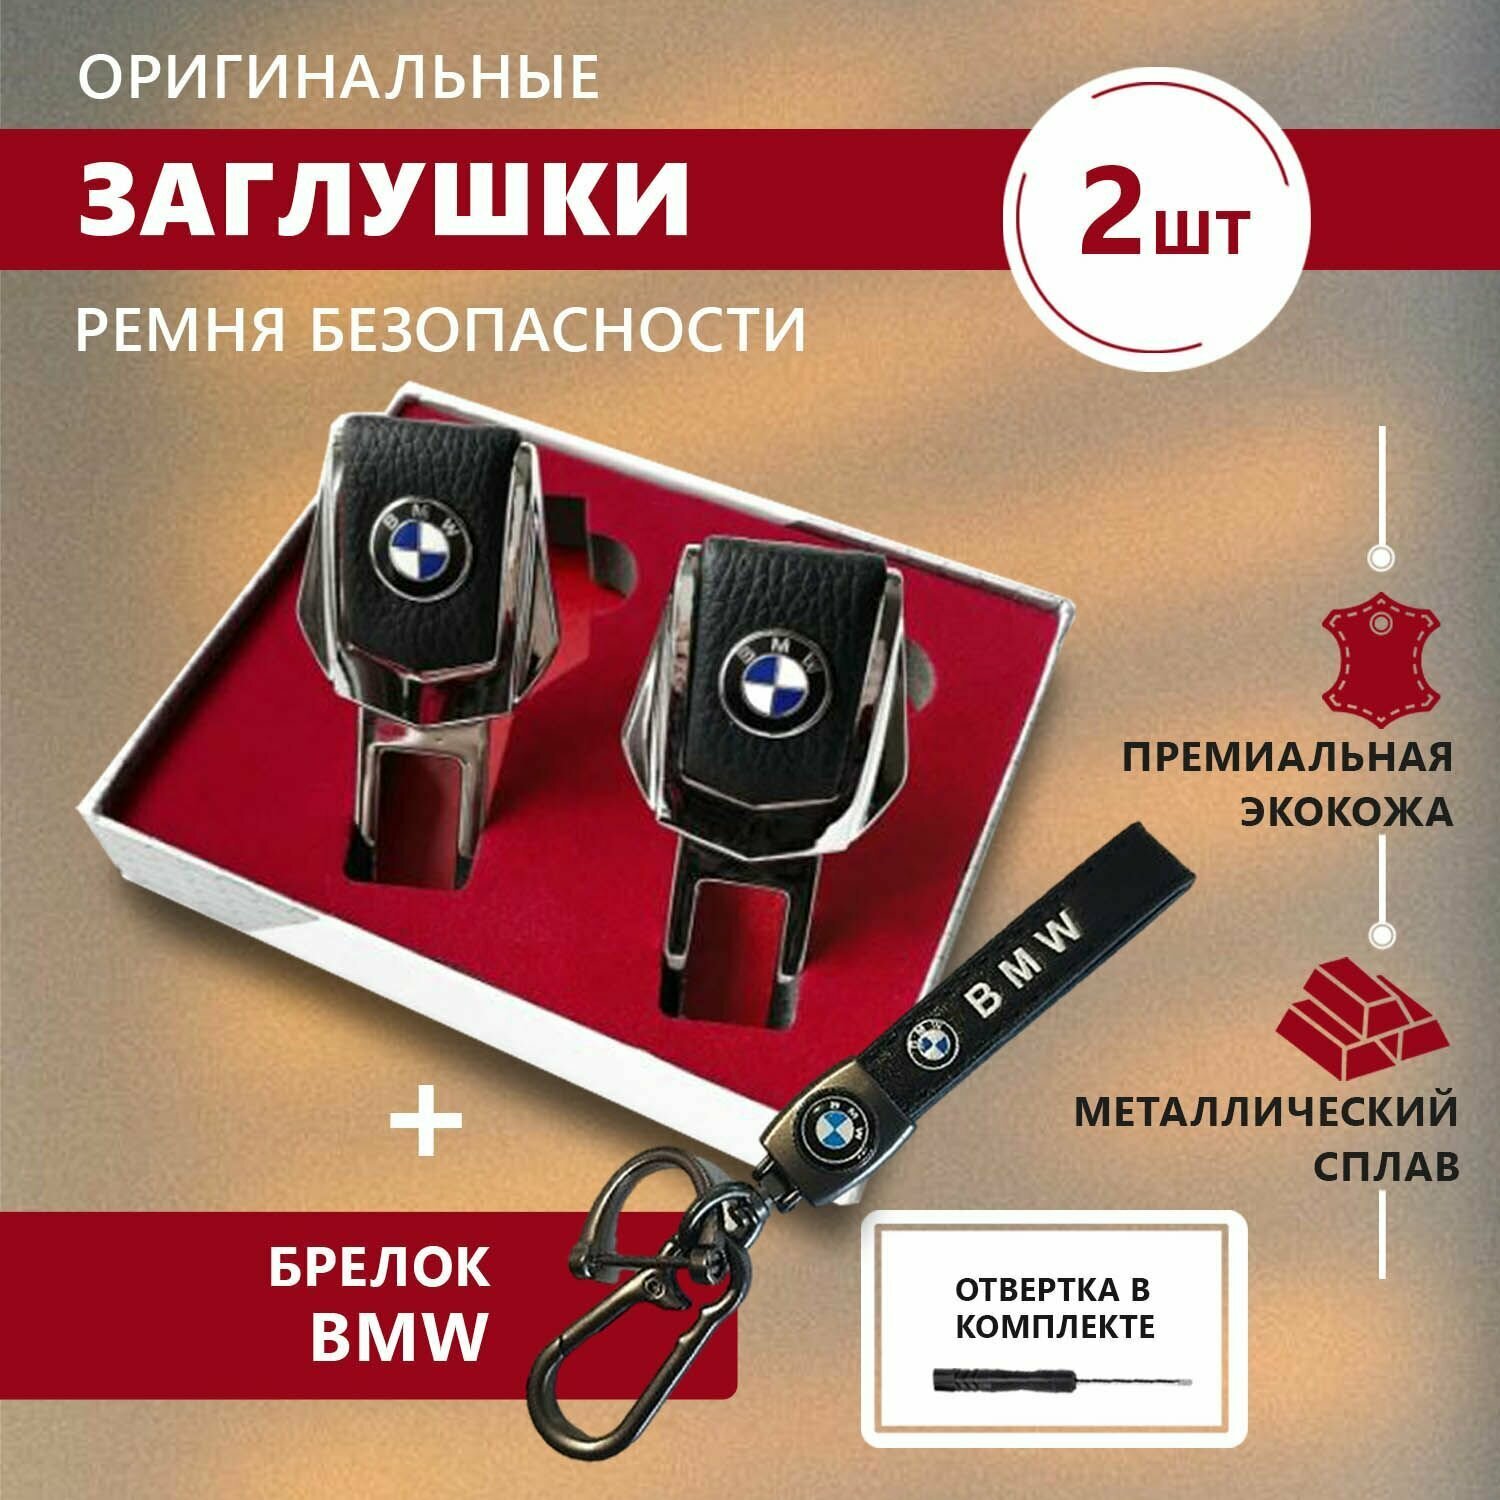 Заглушки ремня безопасности БМВ и брелок с карабином BMW (Набор автолюбителю)